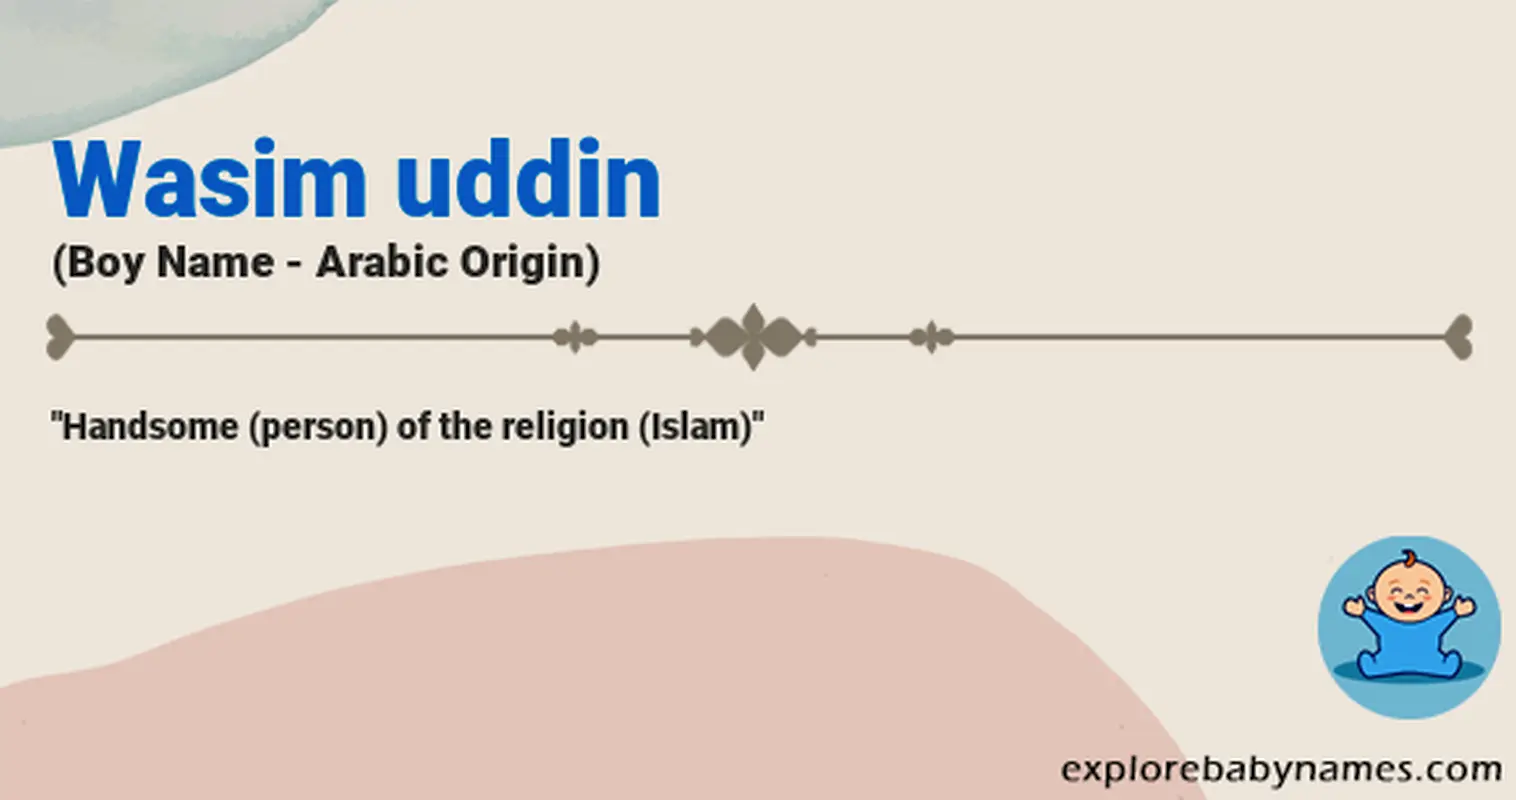 Meaning of Wasim uddin